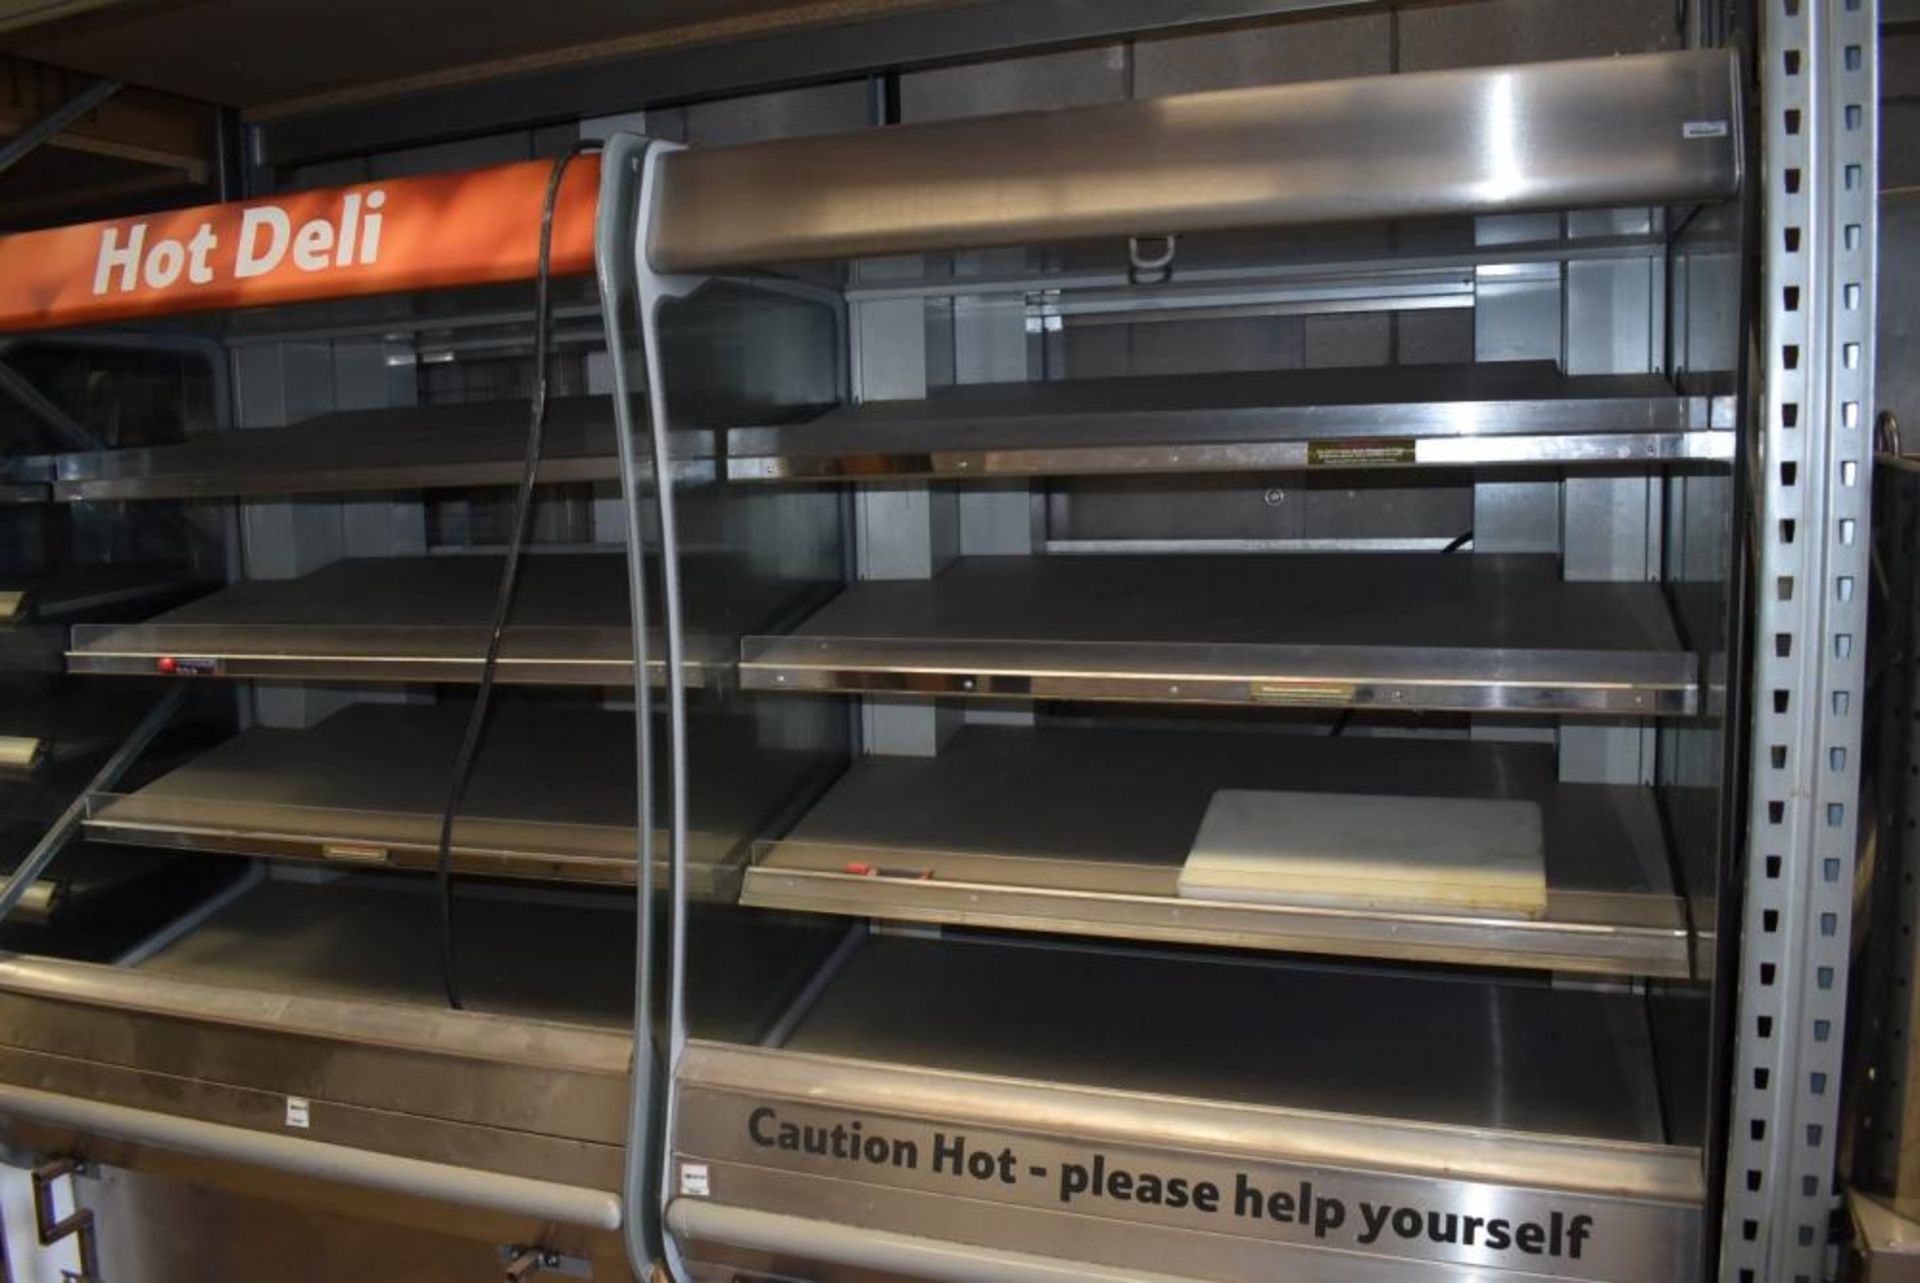 2 x Multi Deck Hot Food Warmer Heated Display Units Hot Food Deli Self Serve Displays - Features Gla - Image 3 of 4